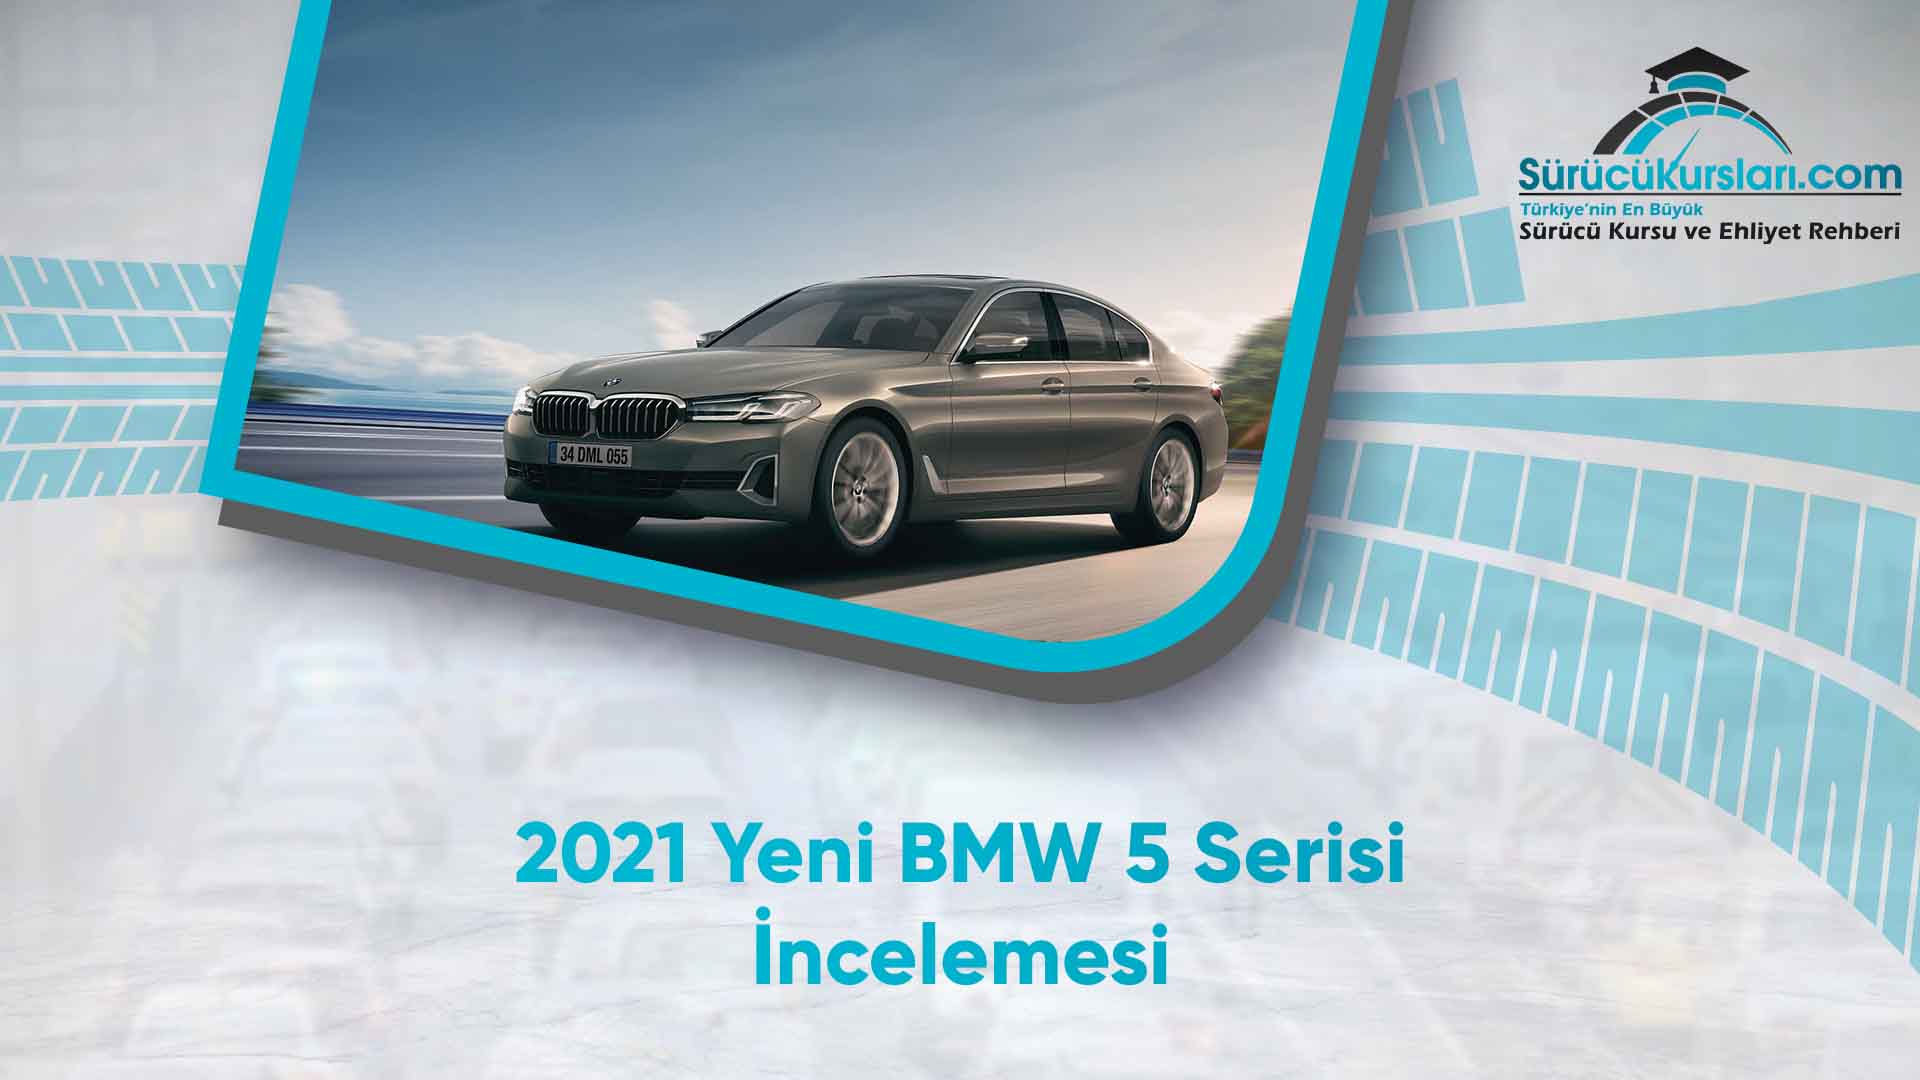 2021 Yeni BMW 5 Serisi İncelemesi